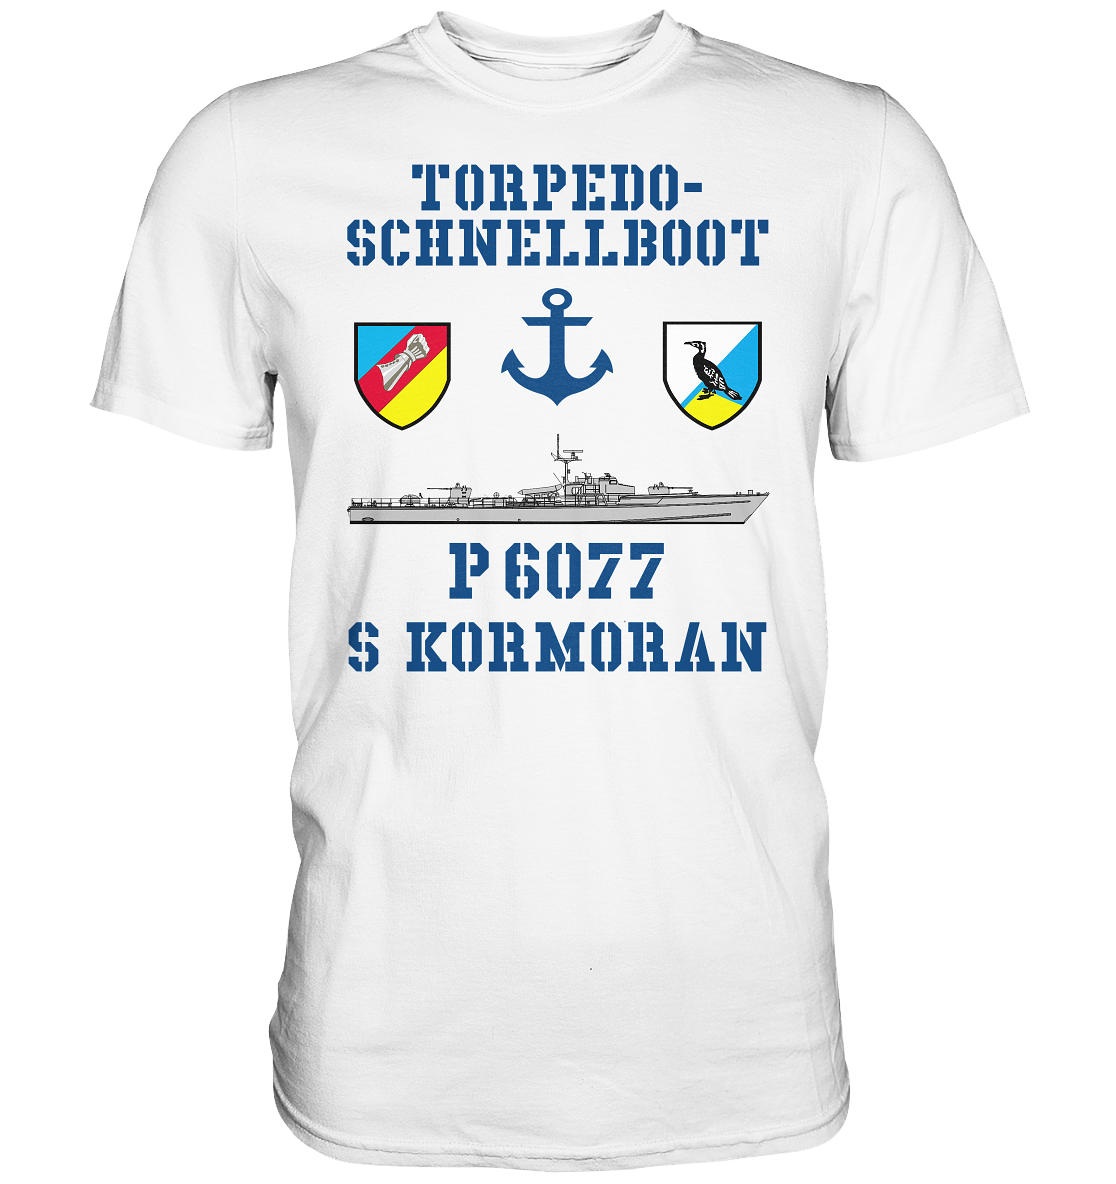 Torpedo-Schnellboot P6077 KORMORAN Anker - Premium Shirt